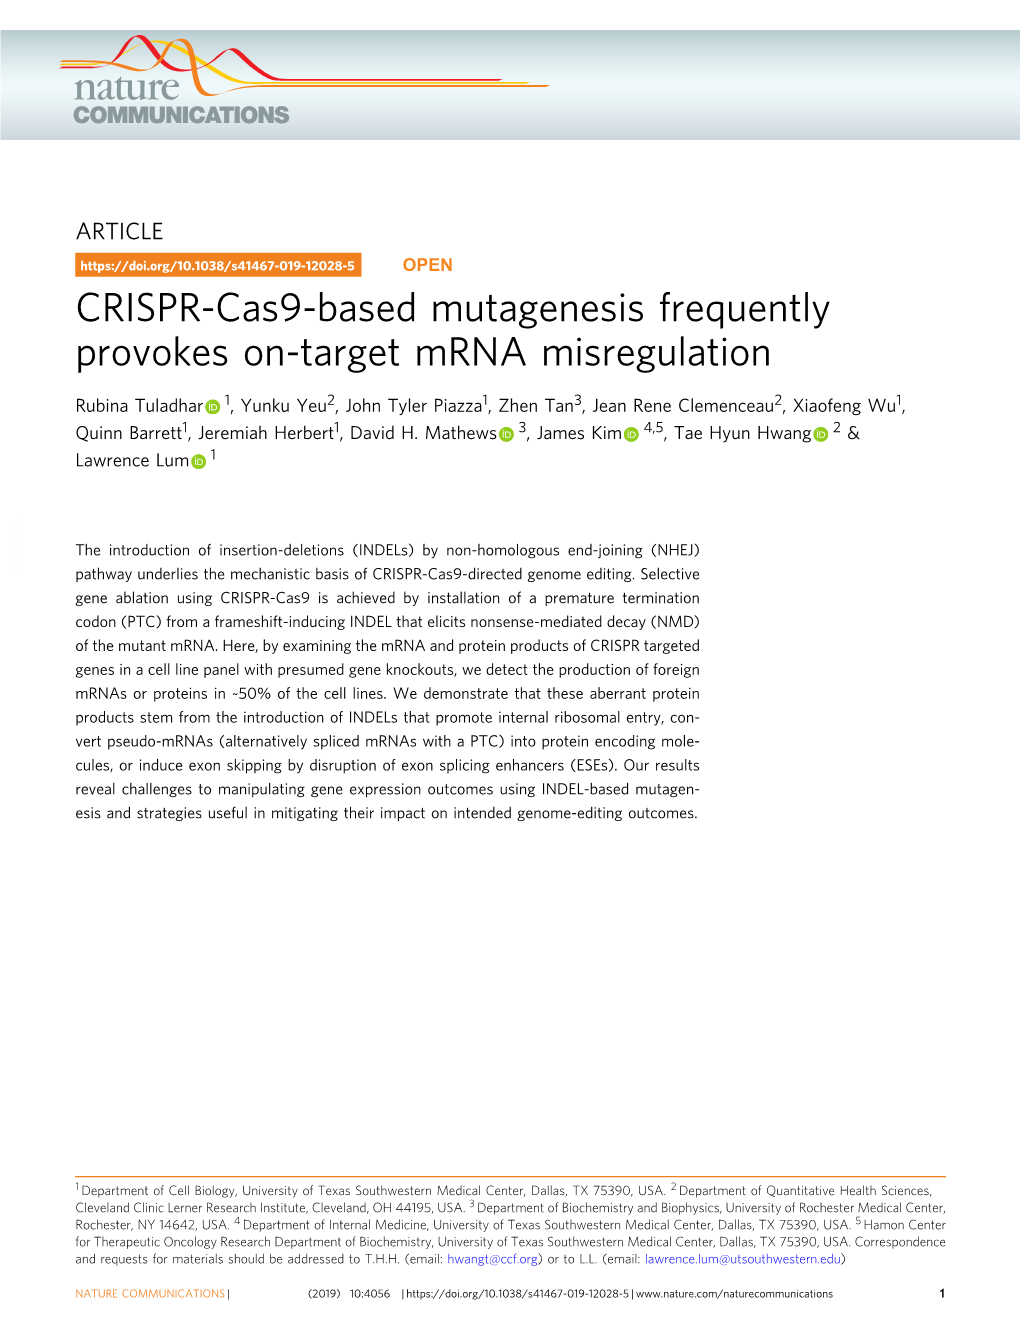 CRISPR-Cas9-Based Mutagenesis Frequently Provokes On-Target Mrna Misregulation